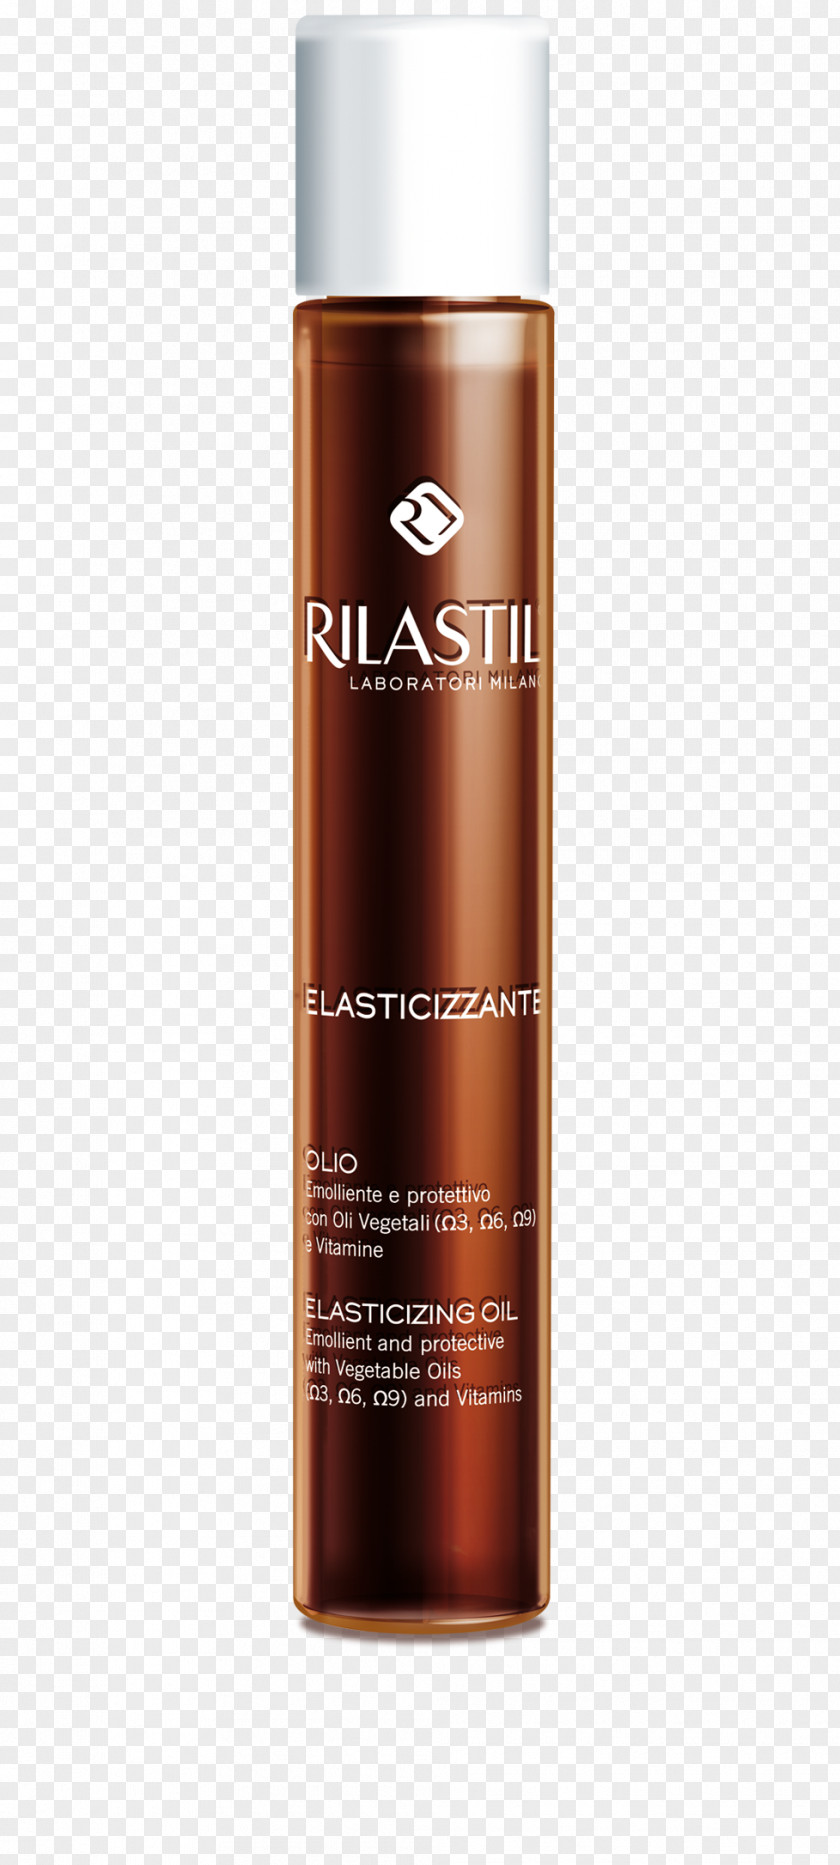 Oil Rilastil Elasticizing Cream Skin Price PNG